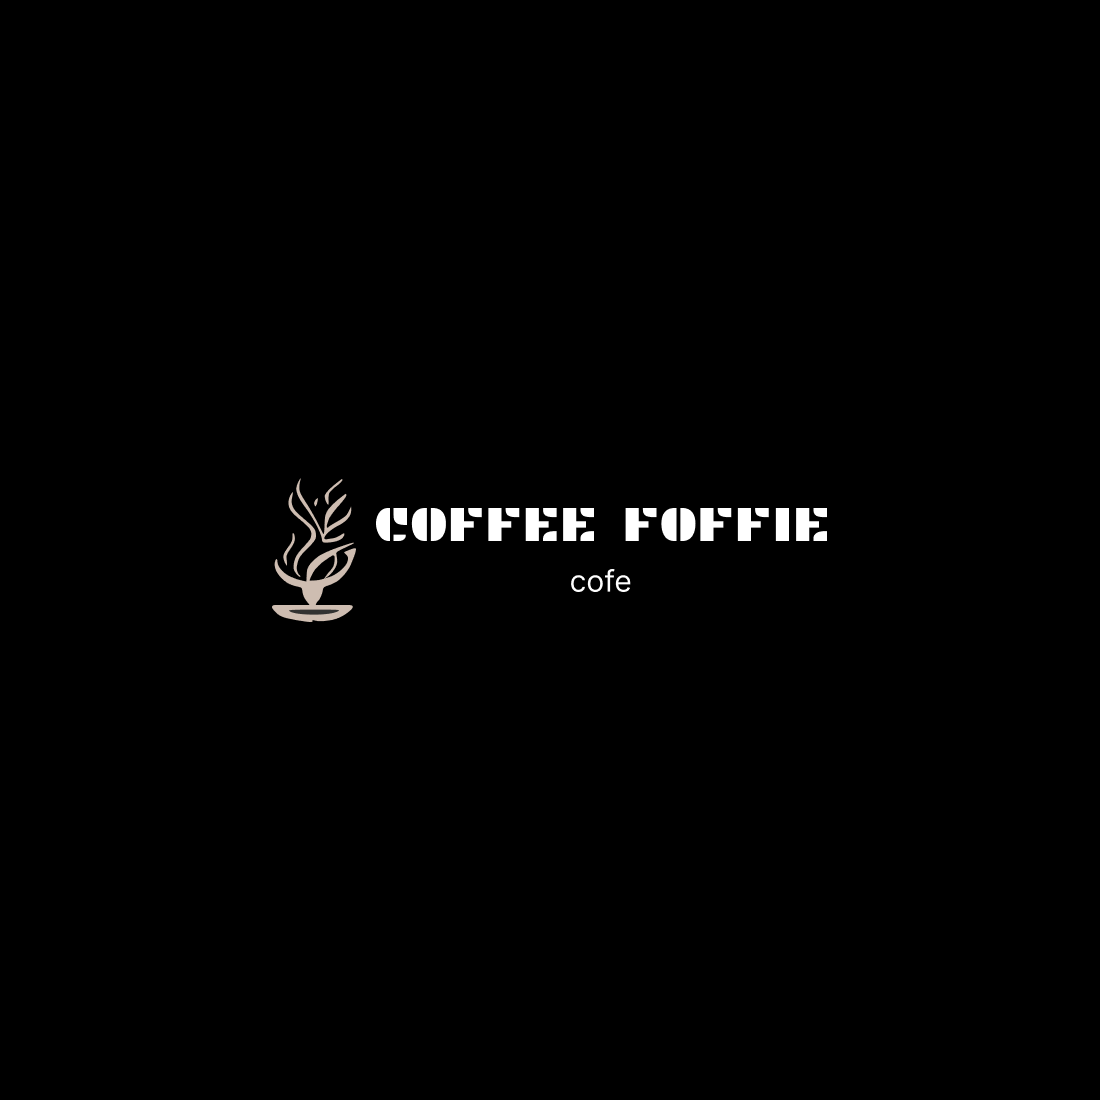 Coffee shop logo design preview image.